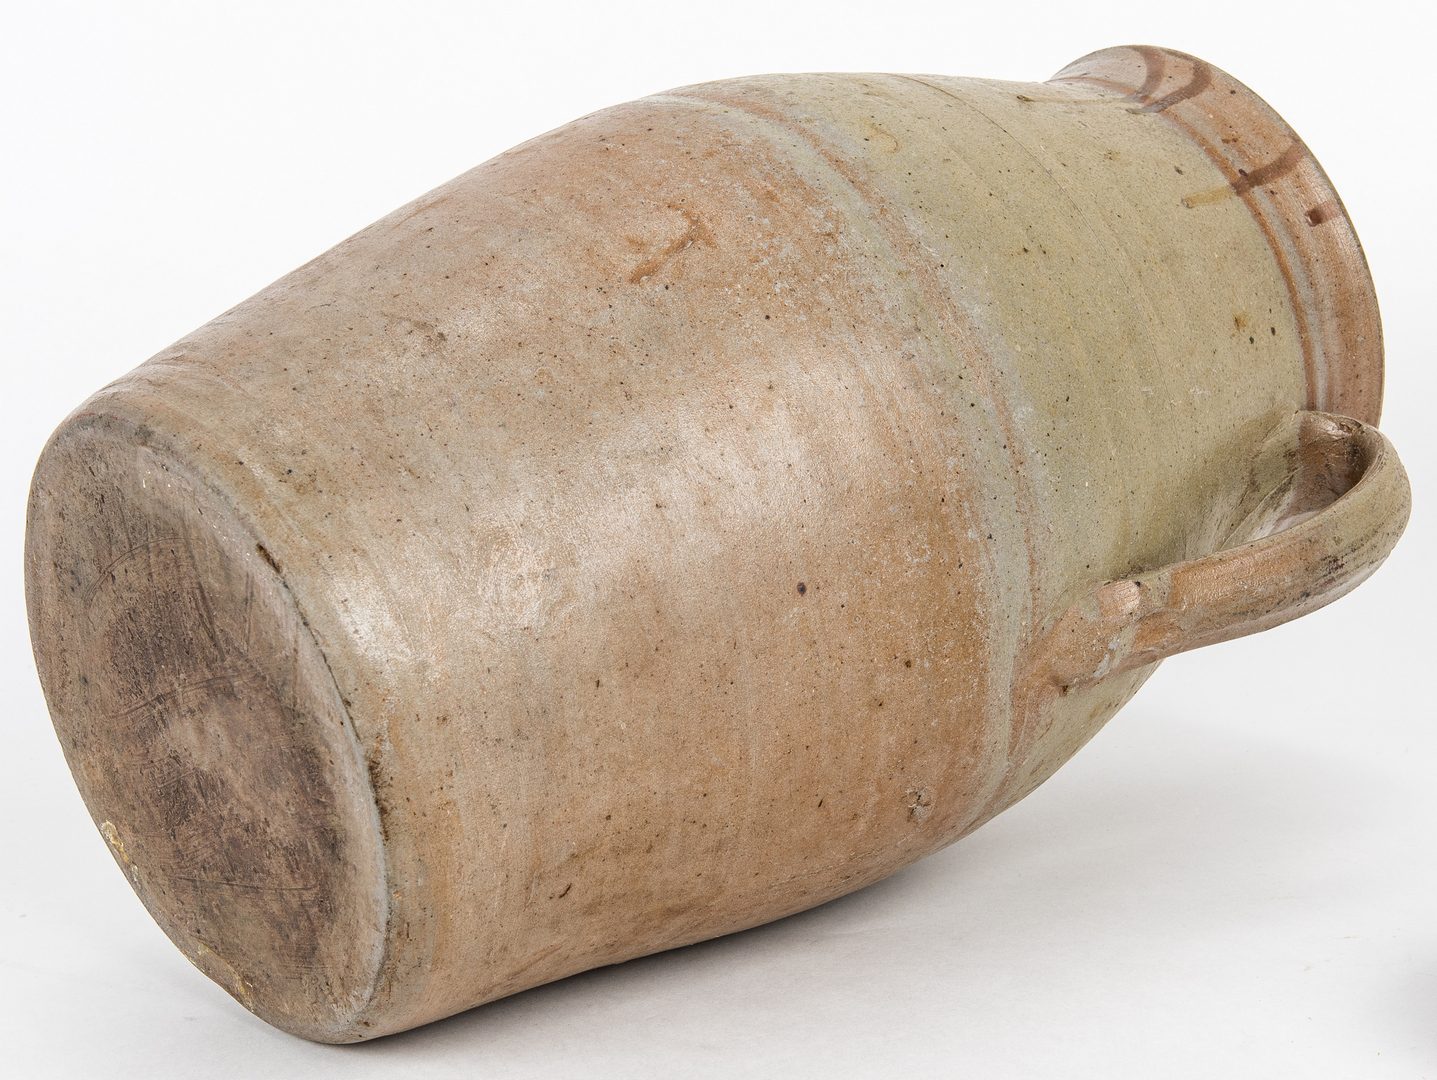 Lot 146: Middle TN Stoneware Churn, Bottle and Pitcher – 3 pcs